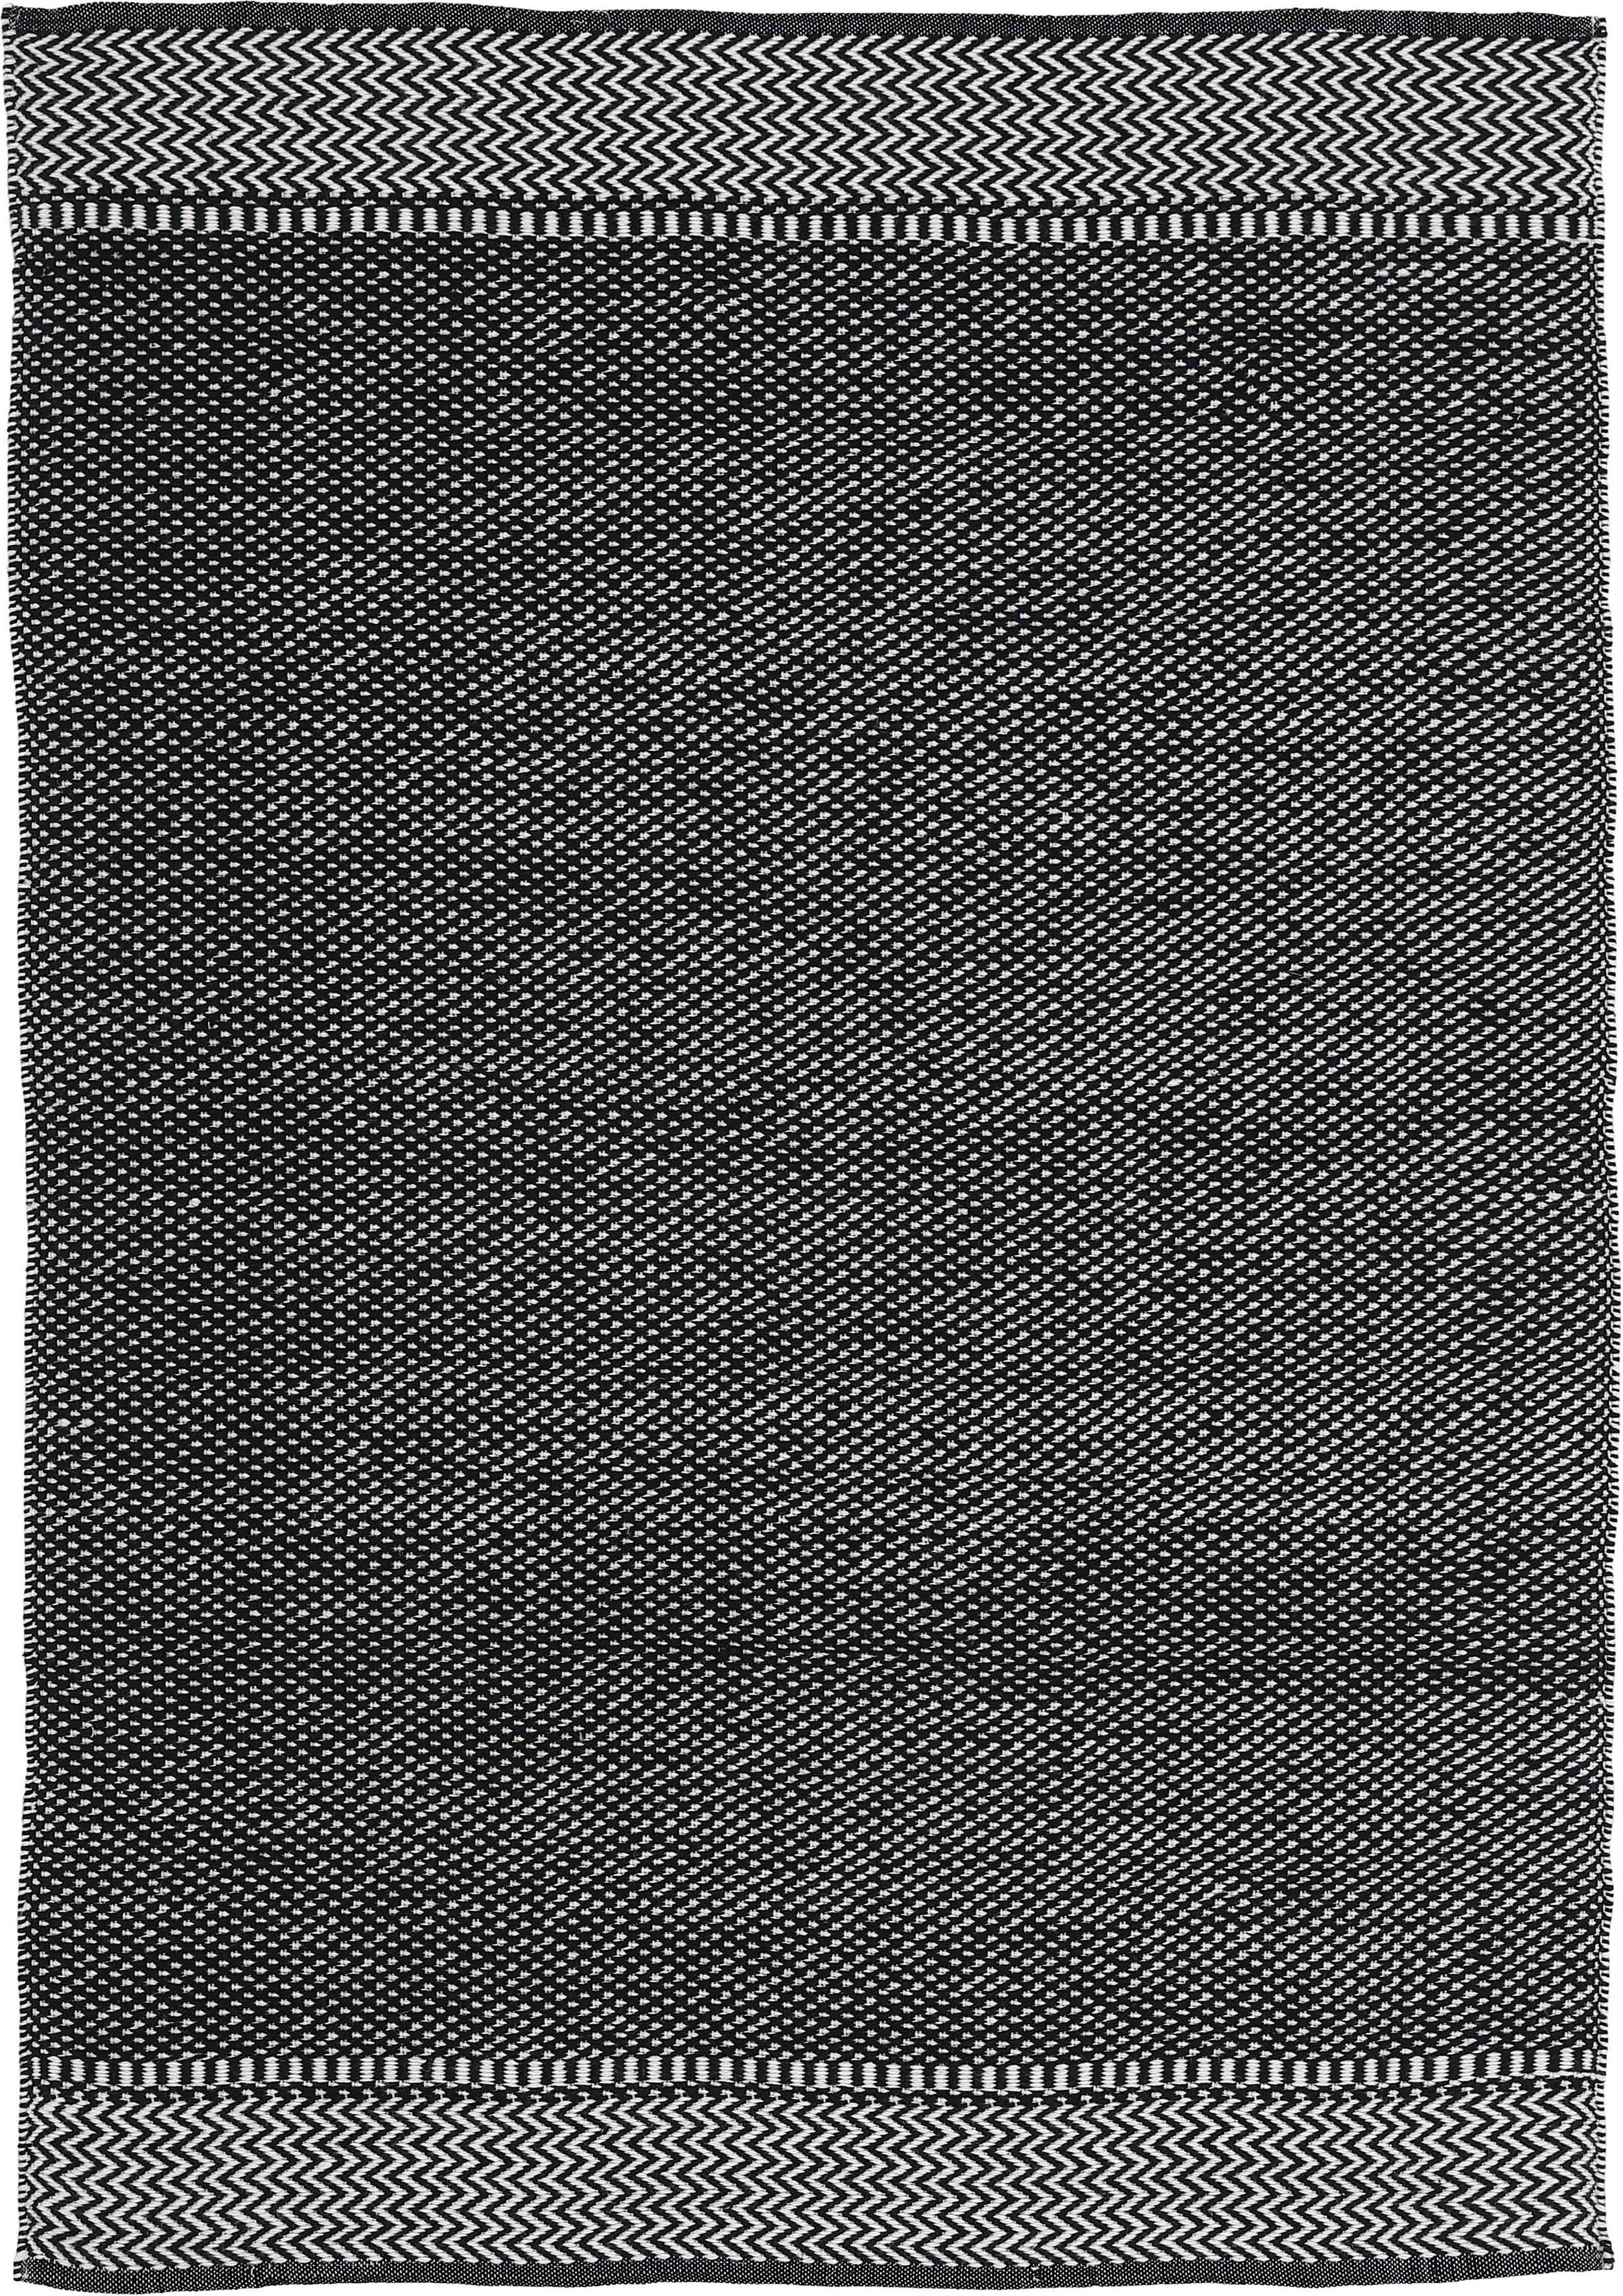 Teppich Frida 205, carpetfine, rechteckig, Höhe: 7 mm, Wendeteppich, 100% recyceltem Material (PET), Flachgewebe, Sisal Optik schwarz